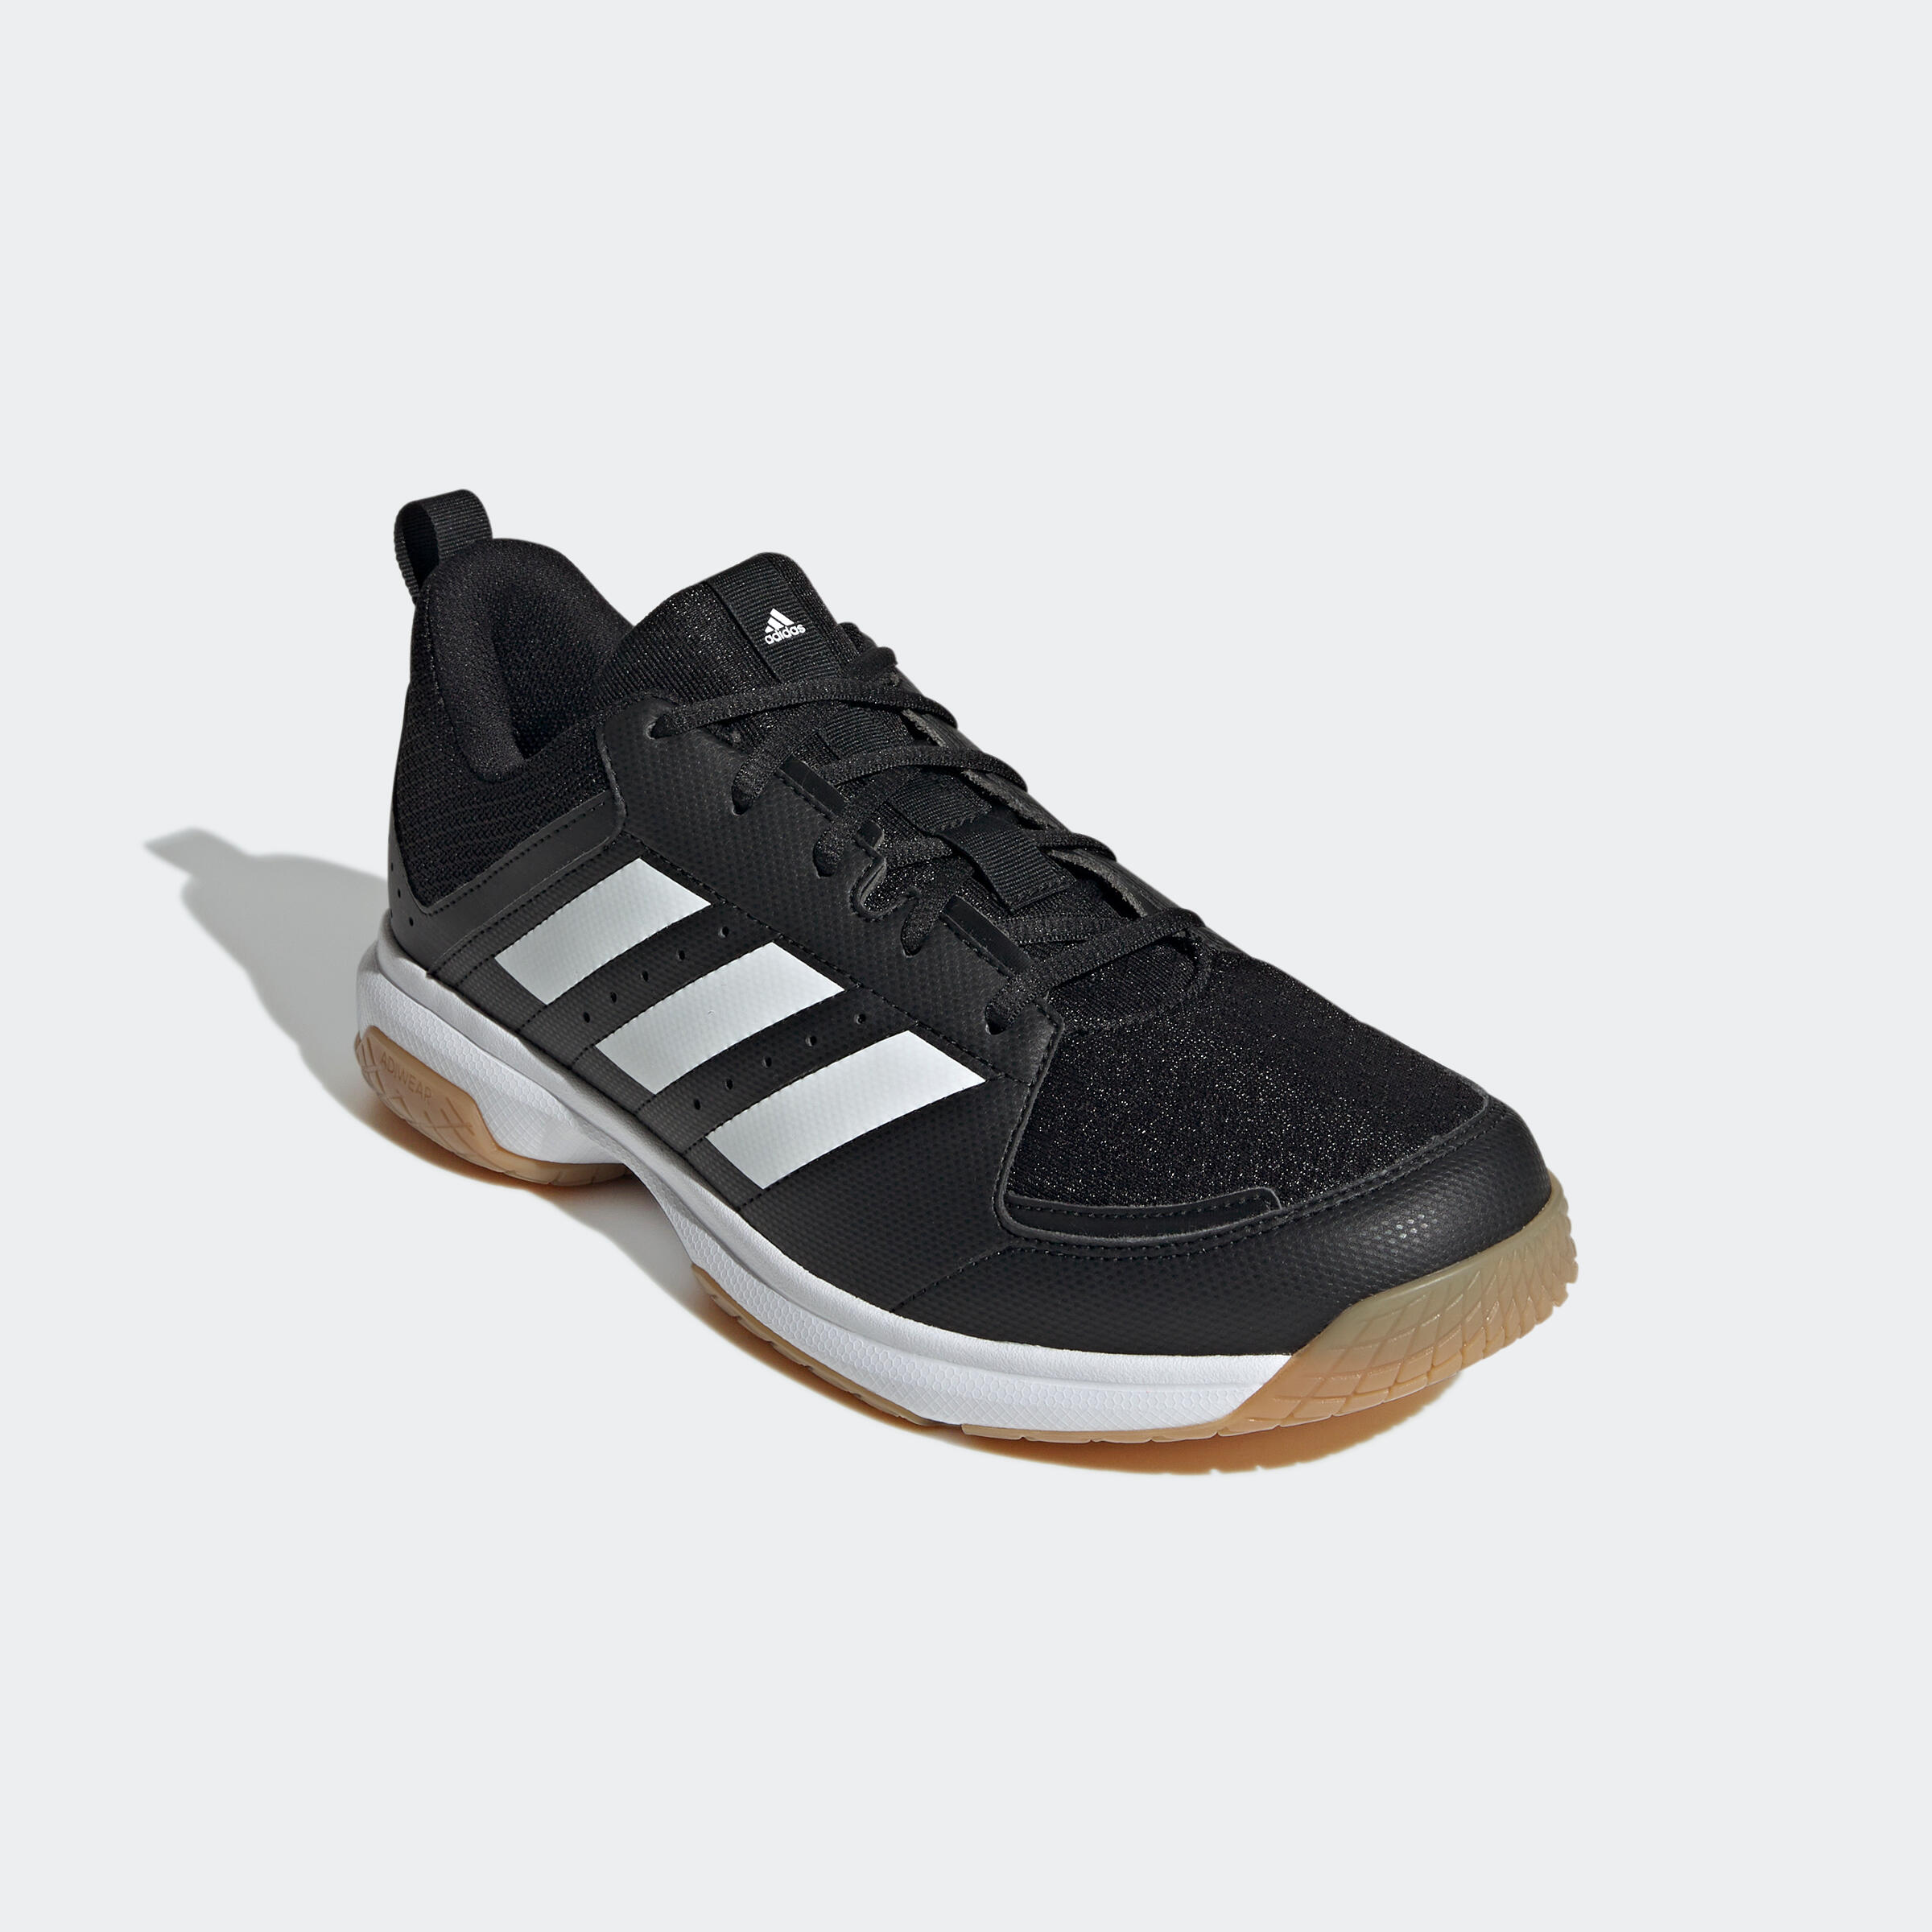 Adult Handball Shoes Ligra - Black 10/10